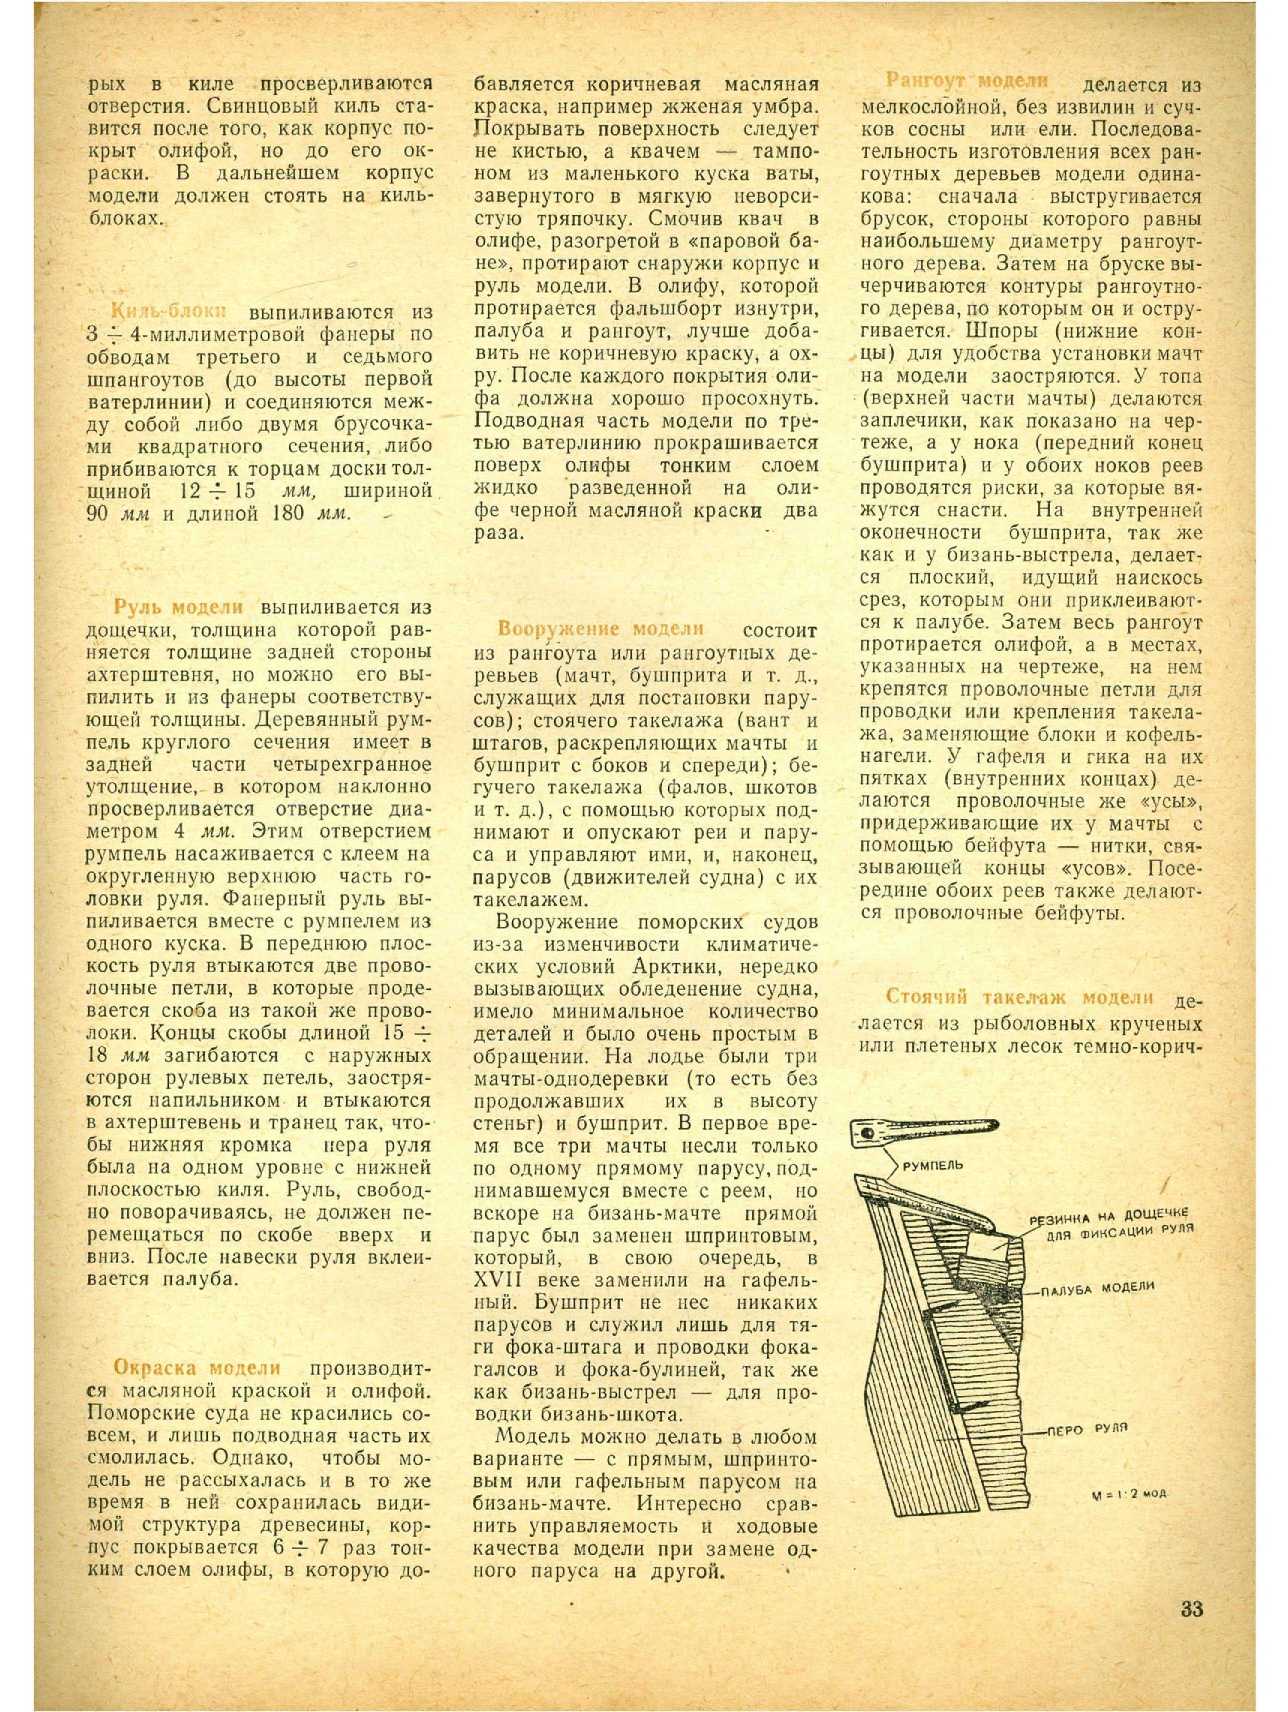 ЮМК 13, 1965, 33 c.